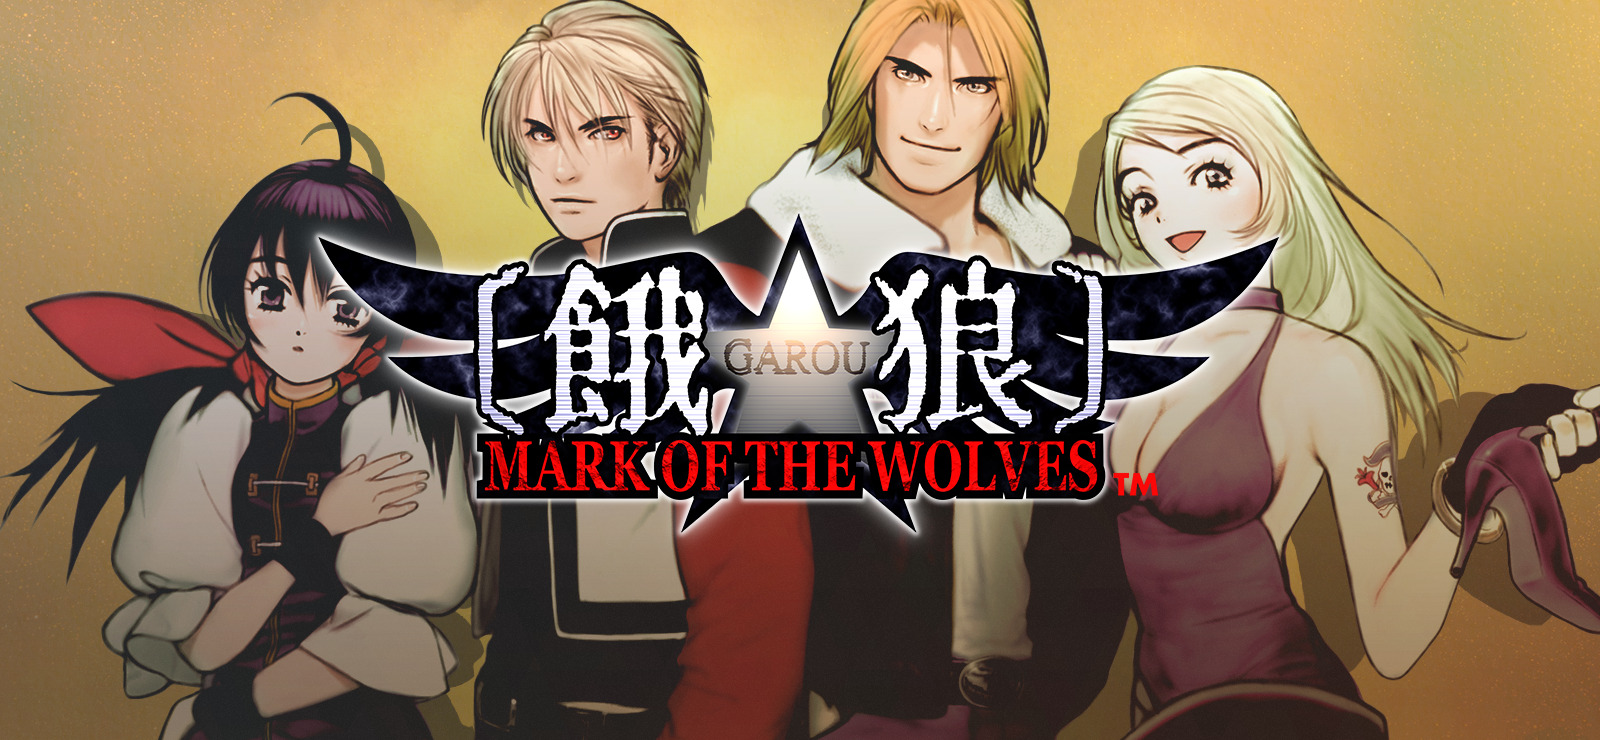 garou mark of the wolves video game